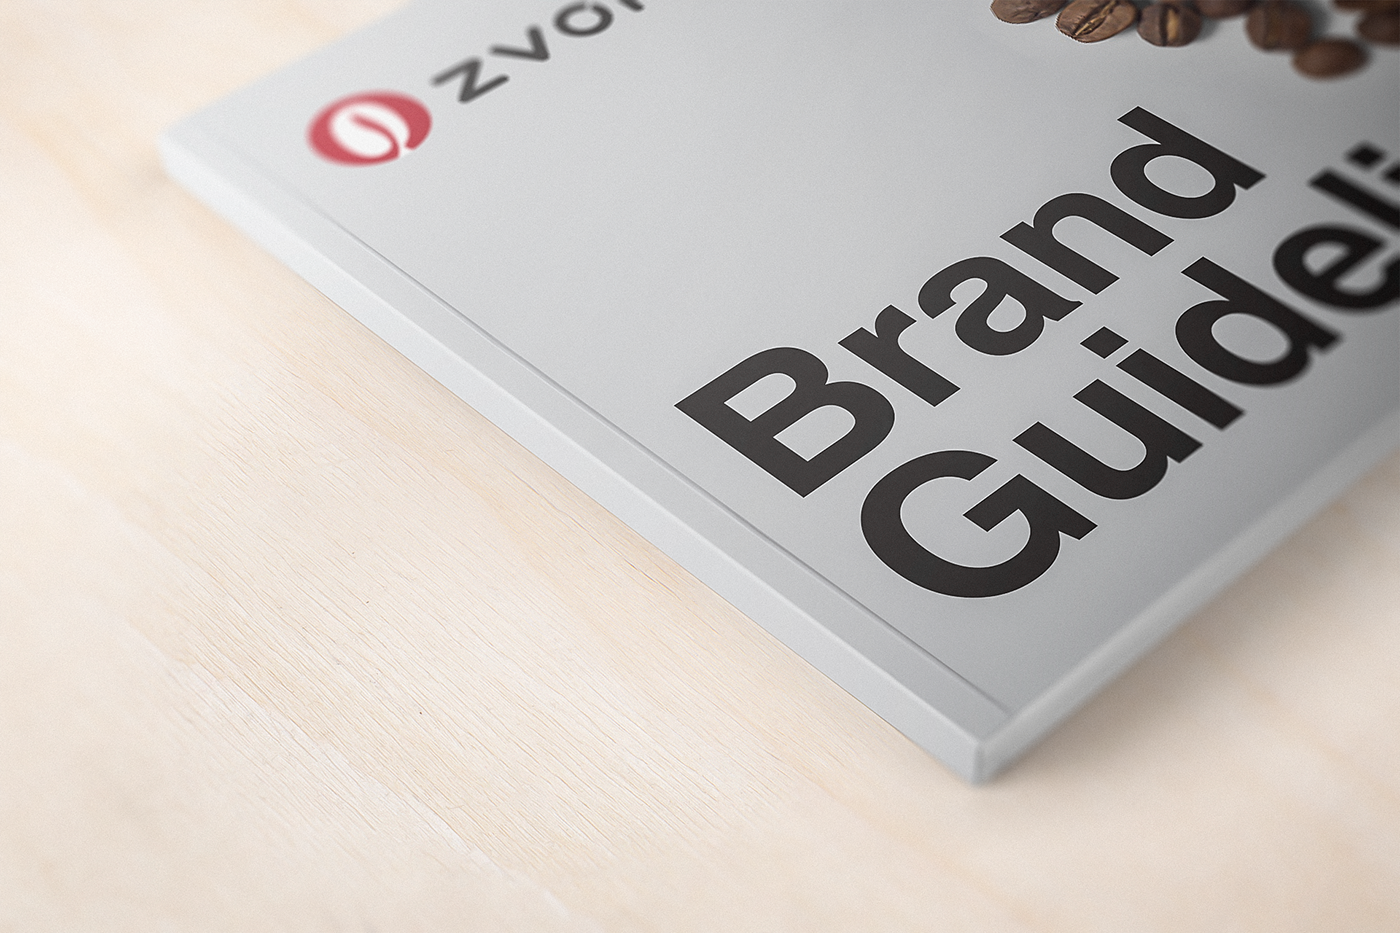 brandbook brand guidelines guidelines brand coffee brand cofee guidelines